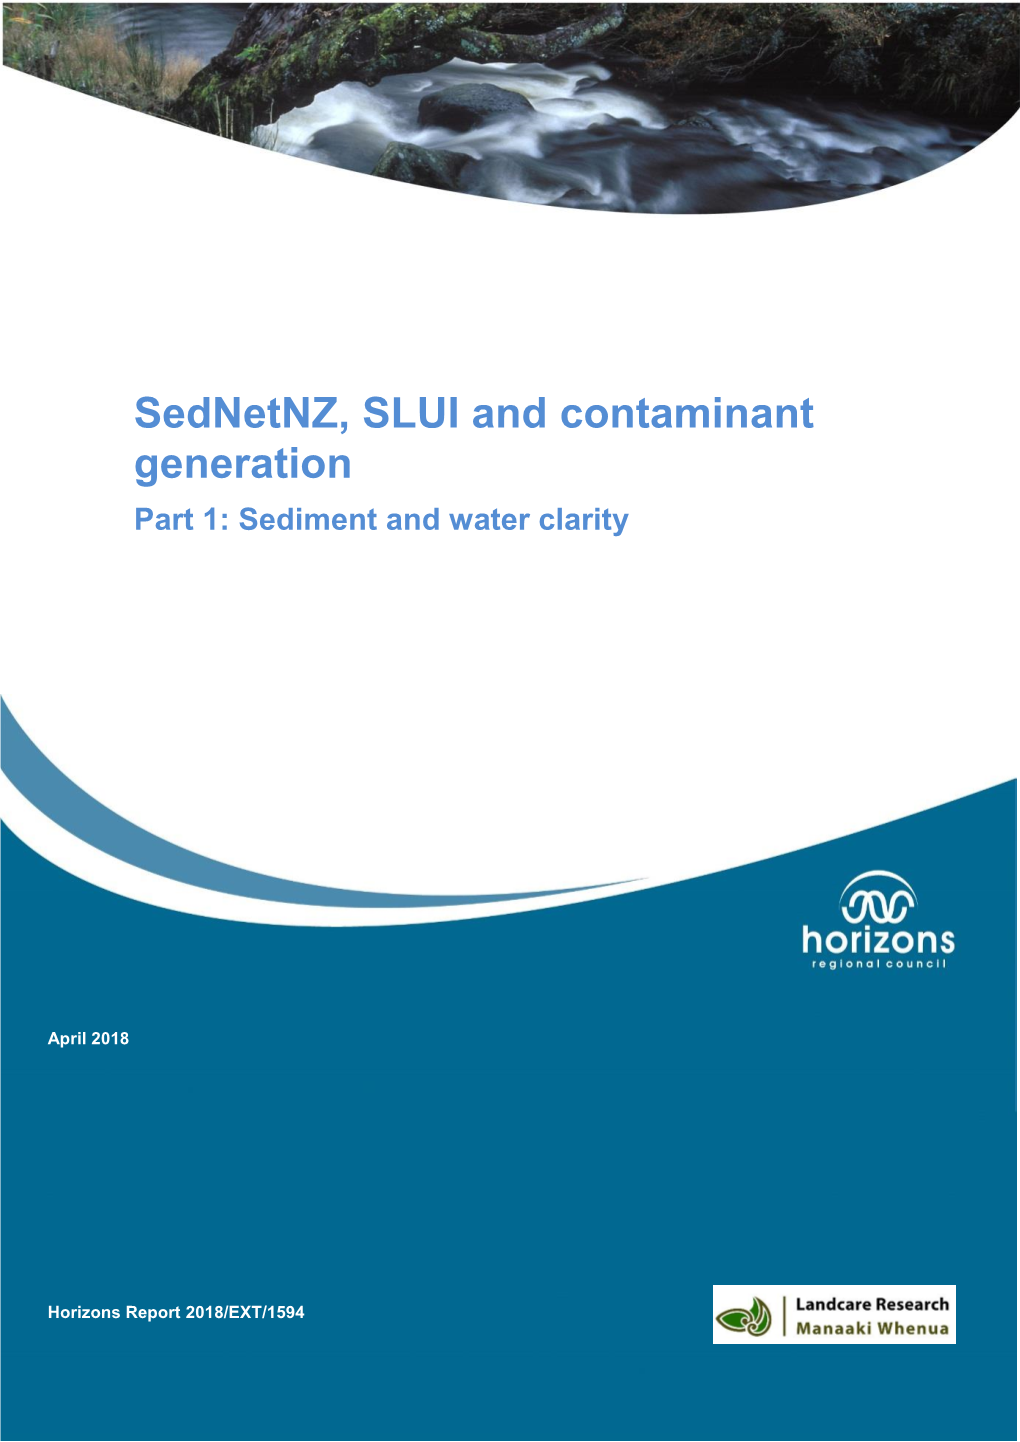 Sednetnz, SLUI and Contaminant Generation